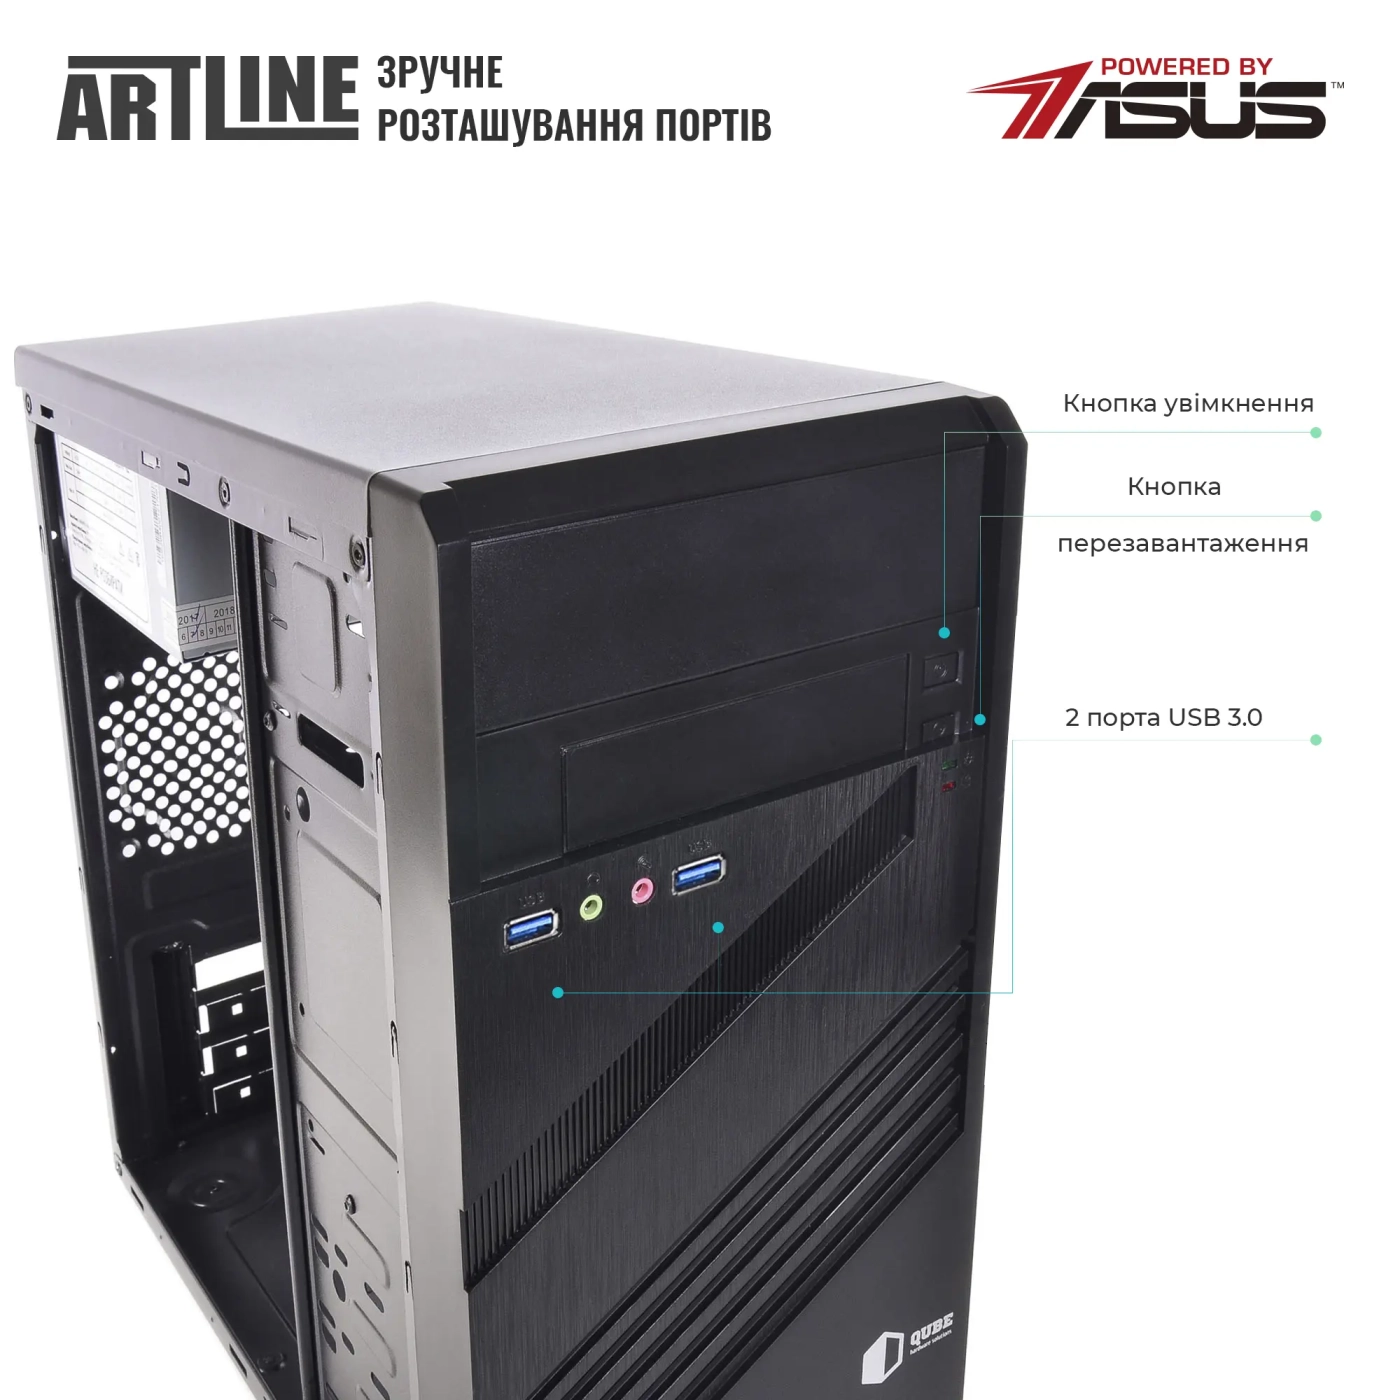 Купить Компьютер ARTLINE Business B57 (B57v84) - фото 2